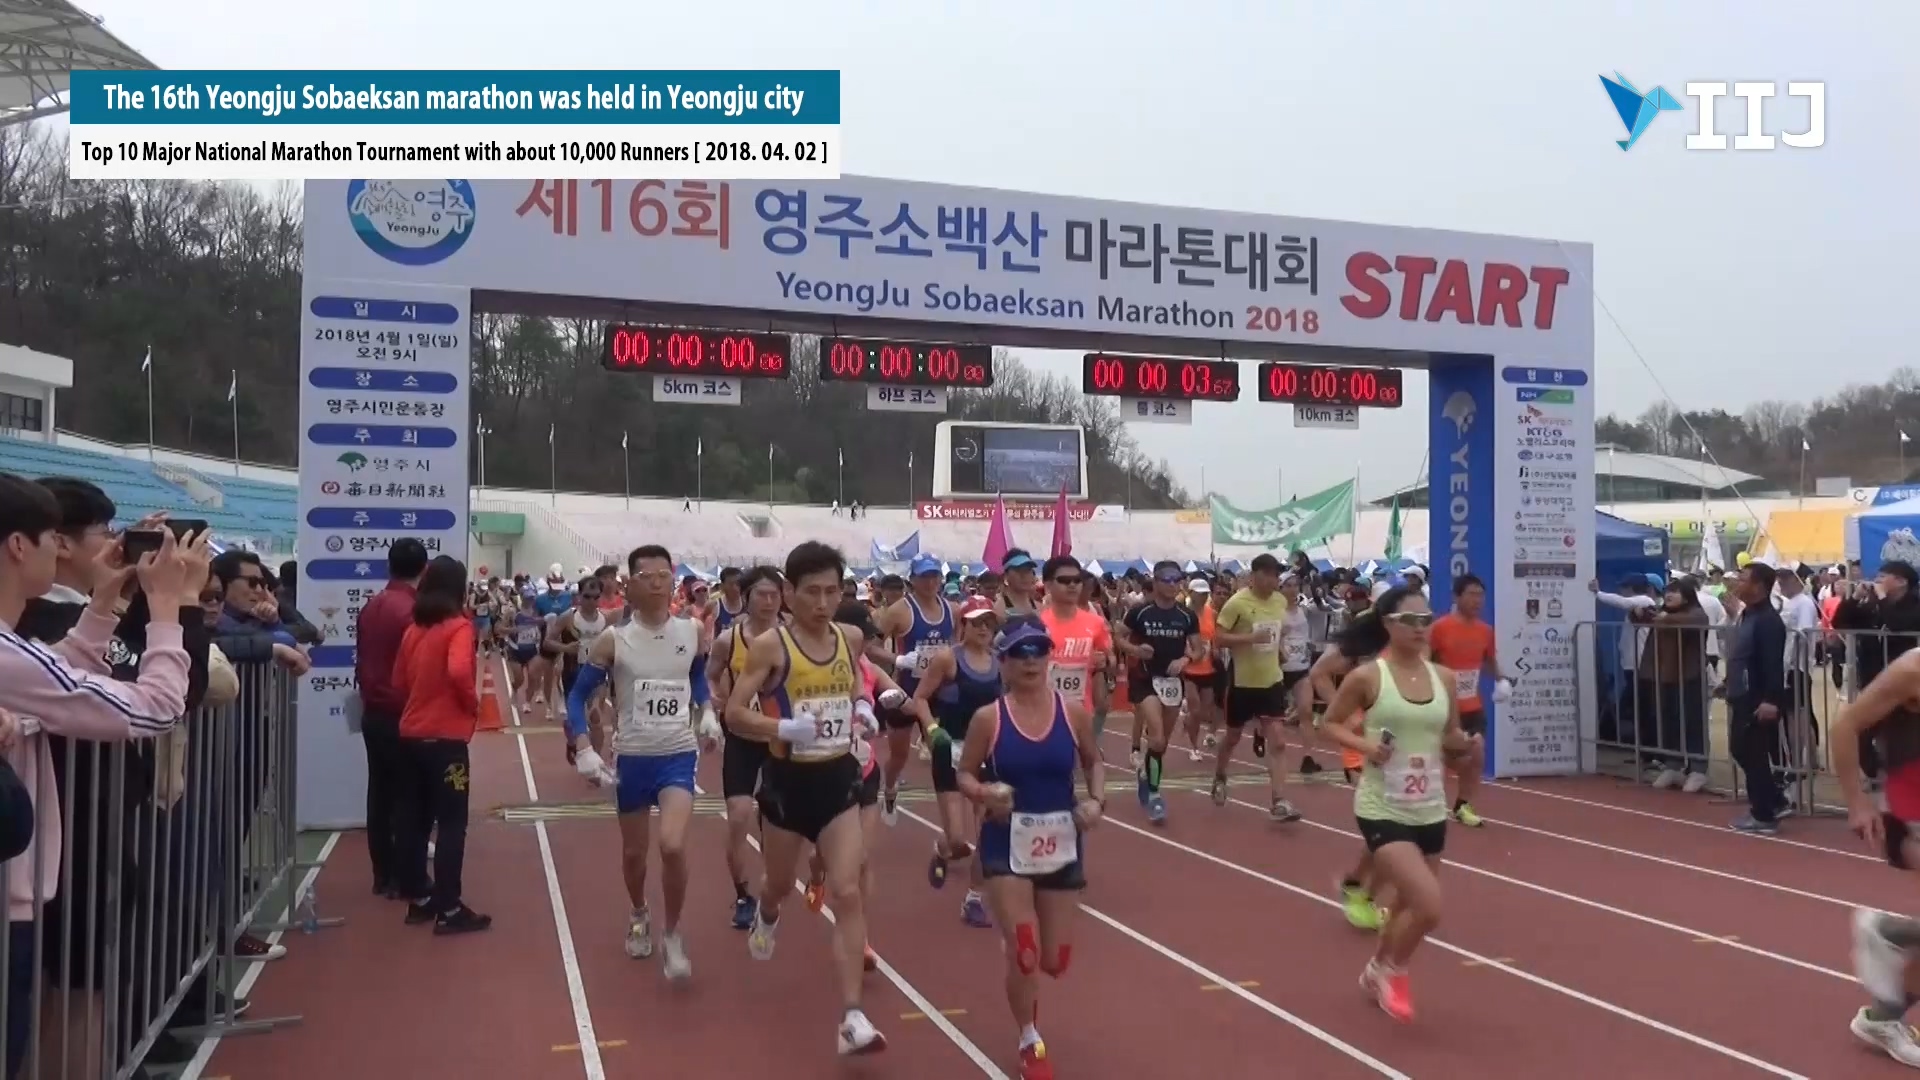 The 16th Yeongju Sobaeksan marathon was held in Yeongju city